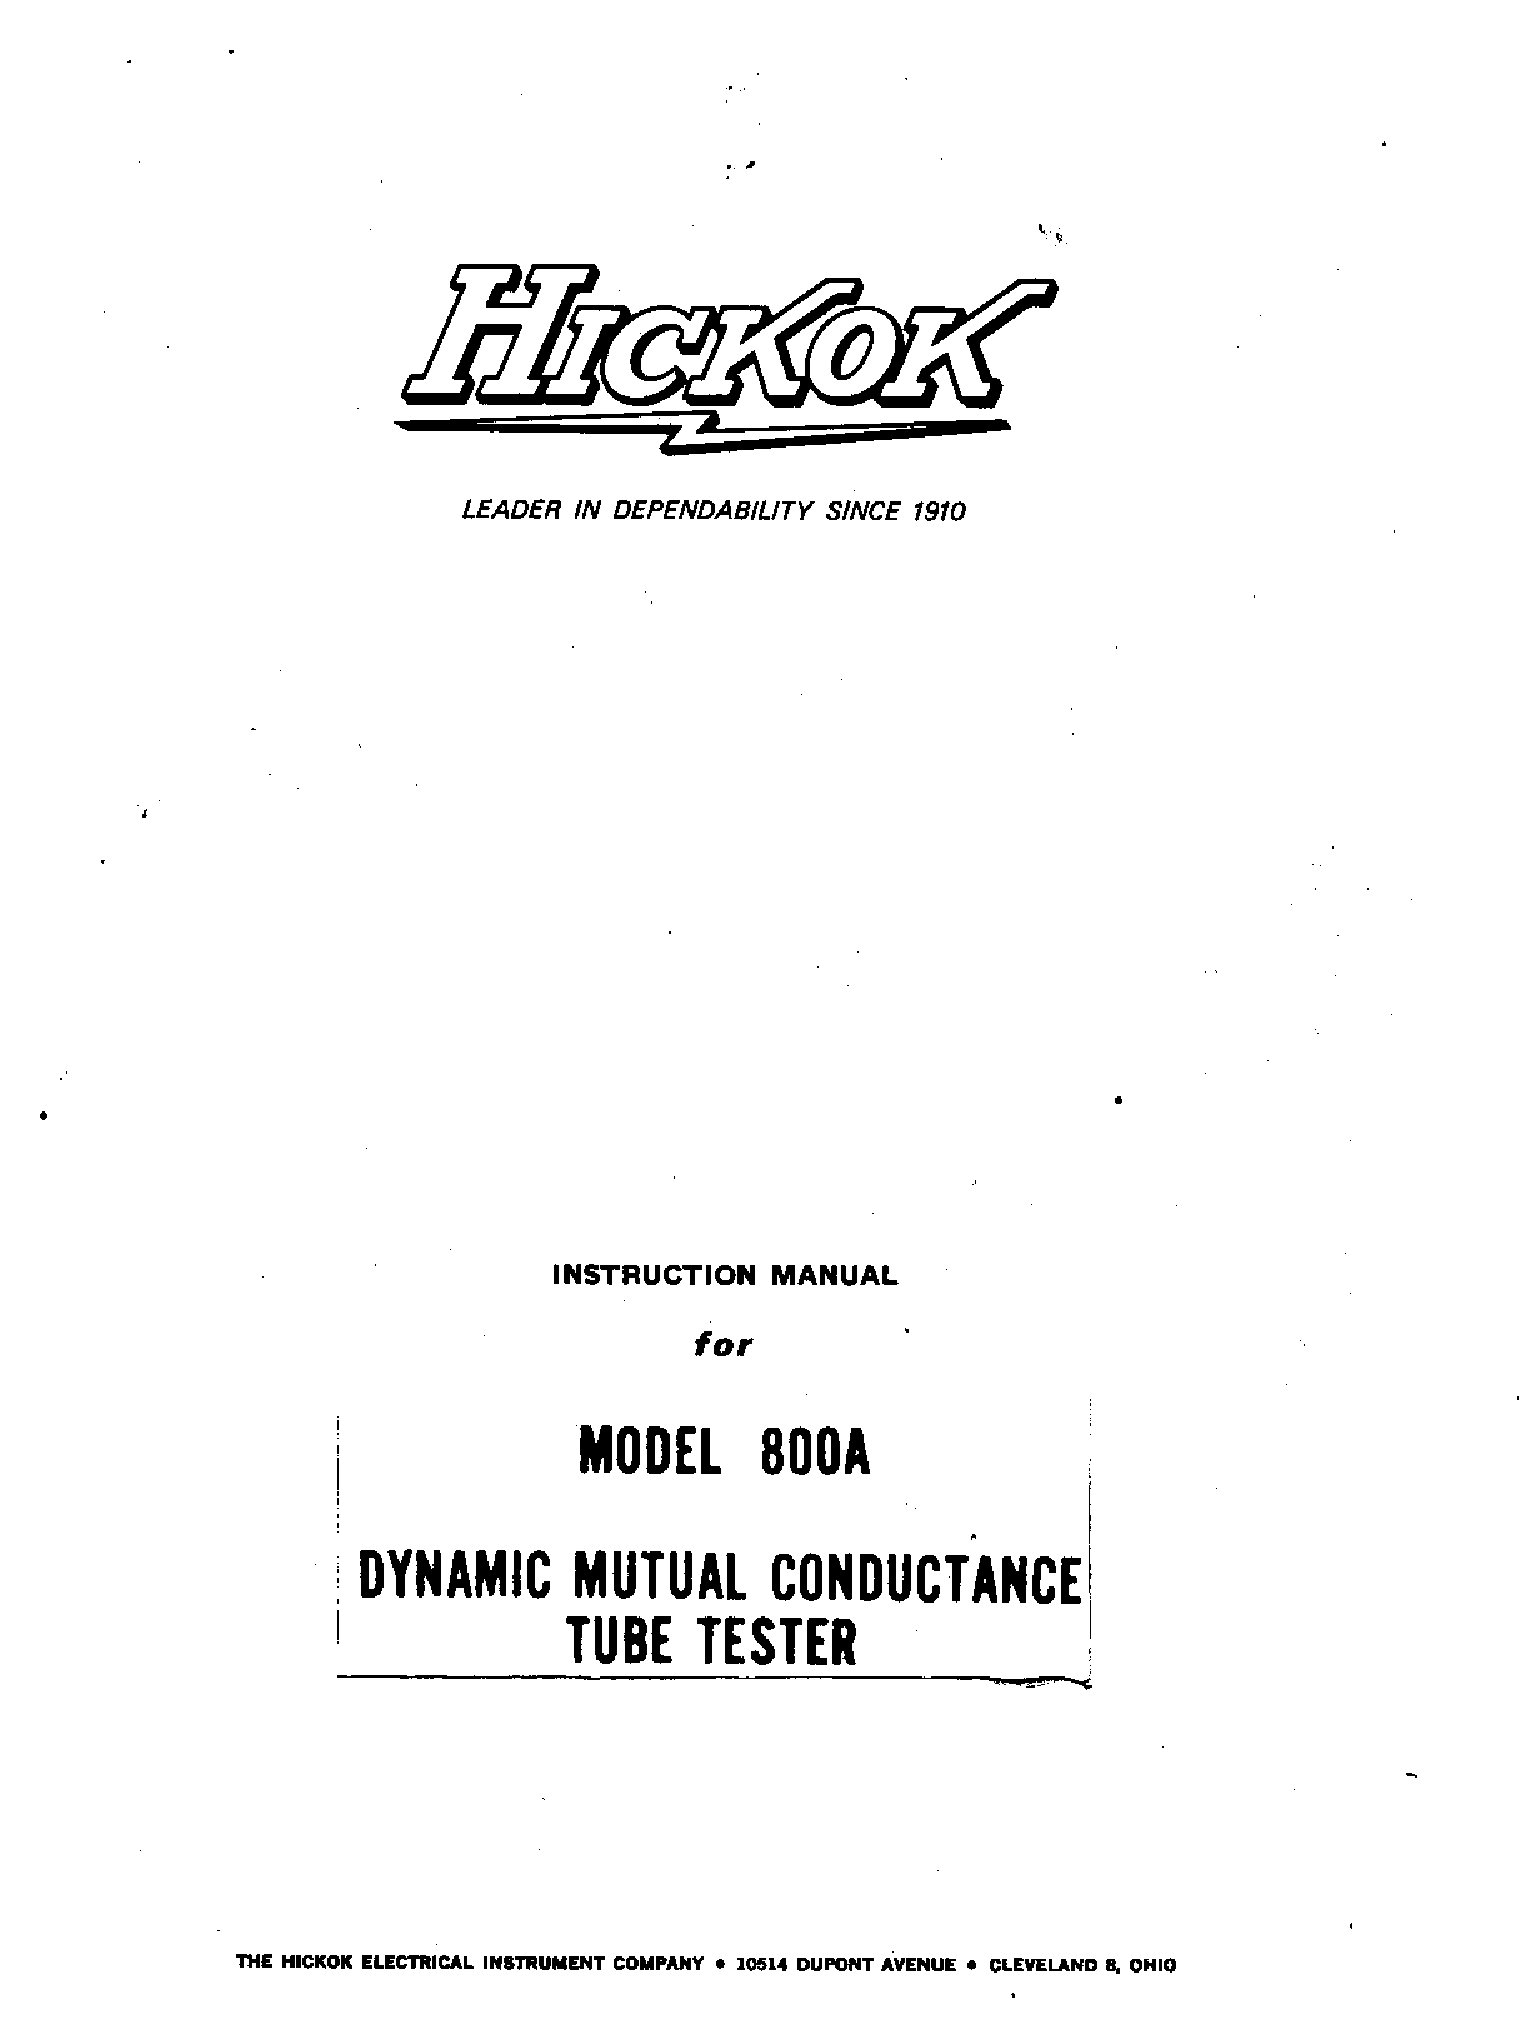 870 Instruction manual Hickok 